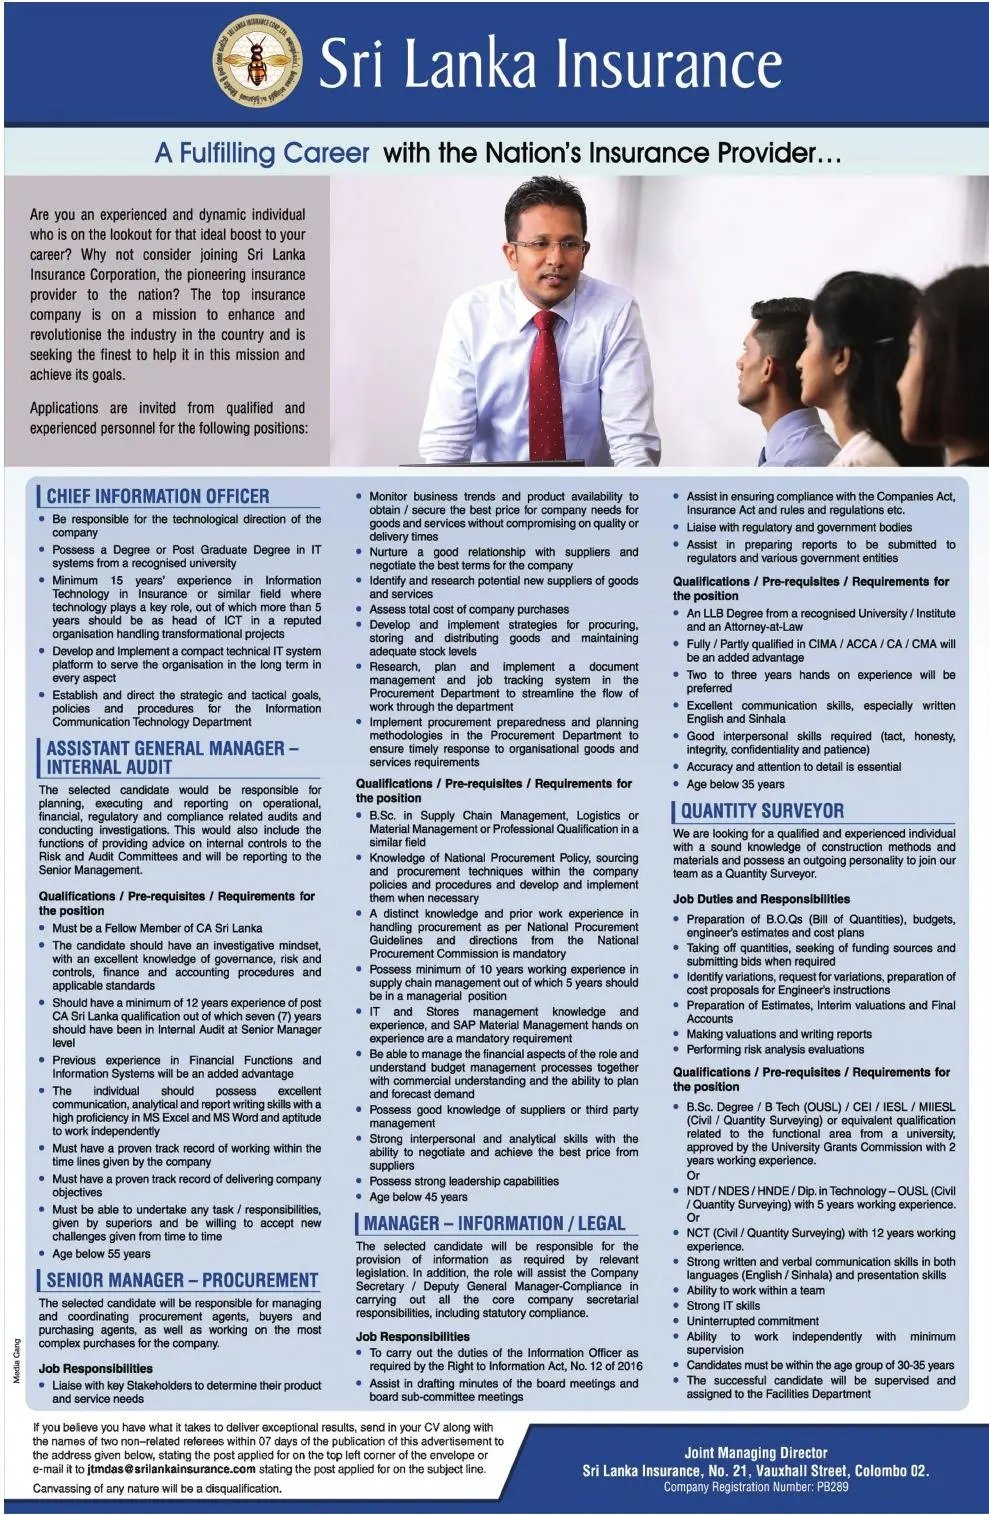 Sri Lanka Insurance Vacancies